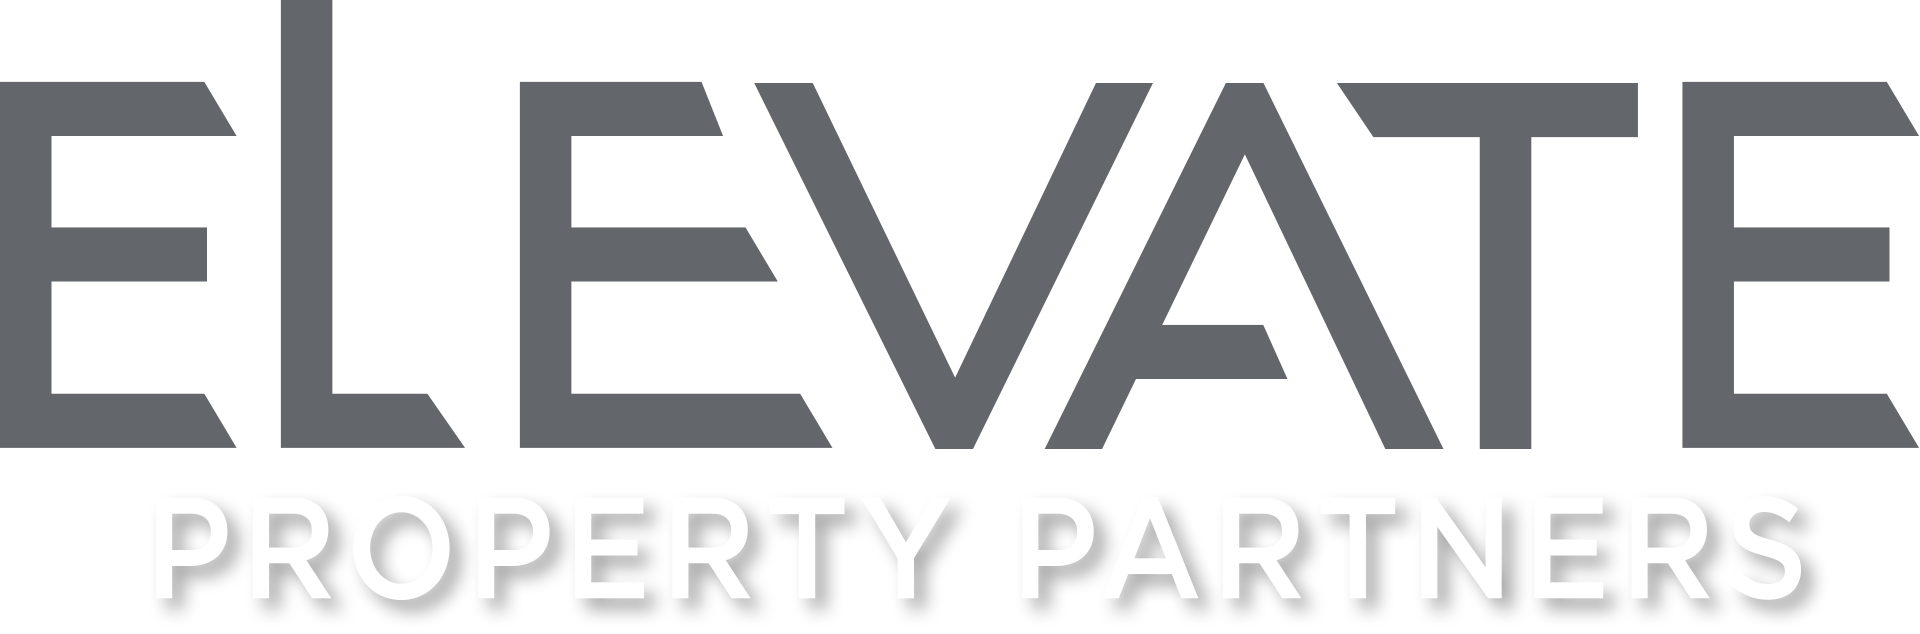 Elevate Property Partners Logo